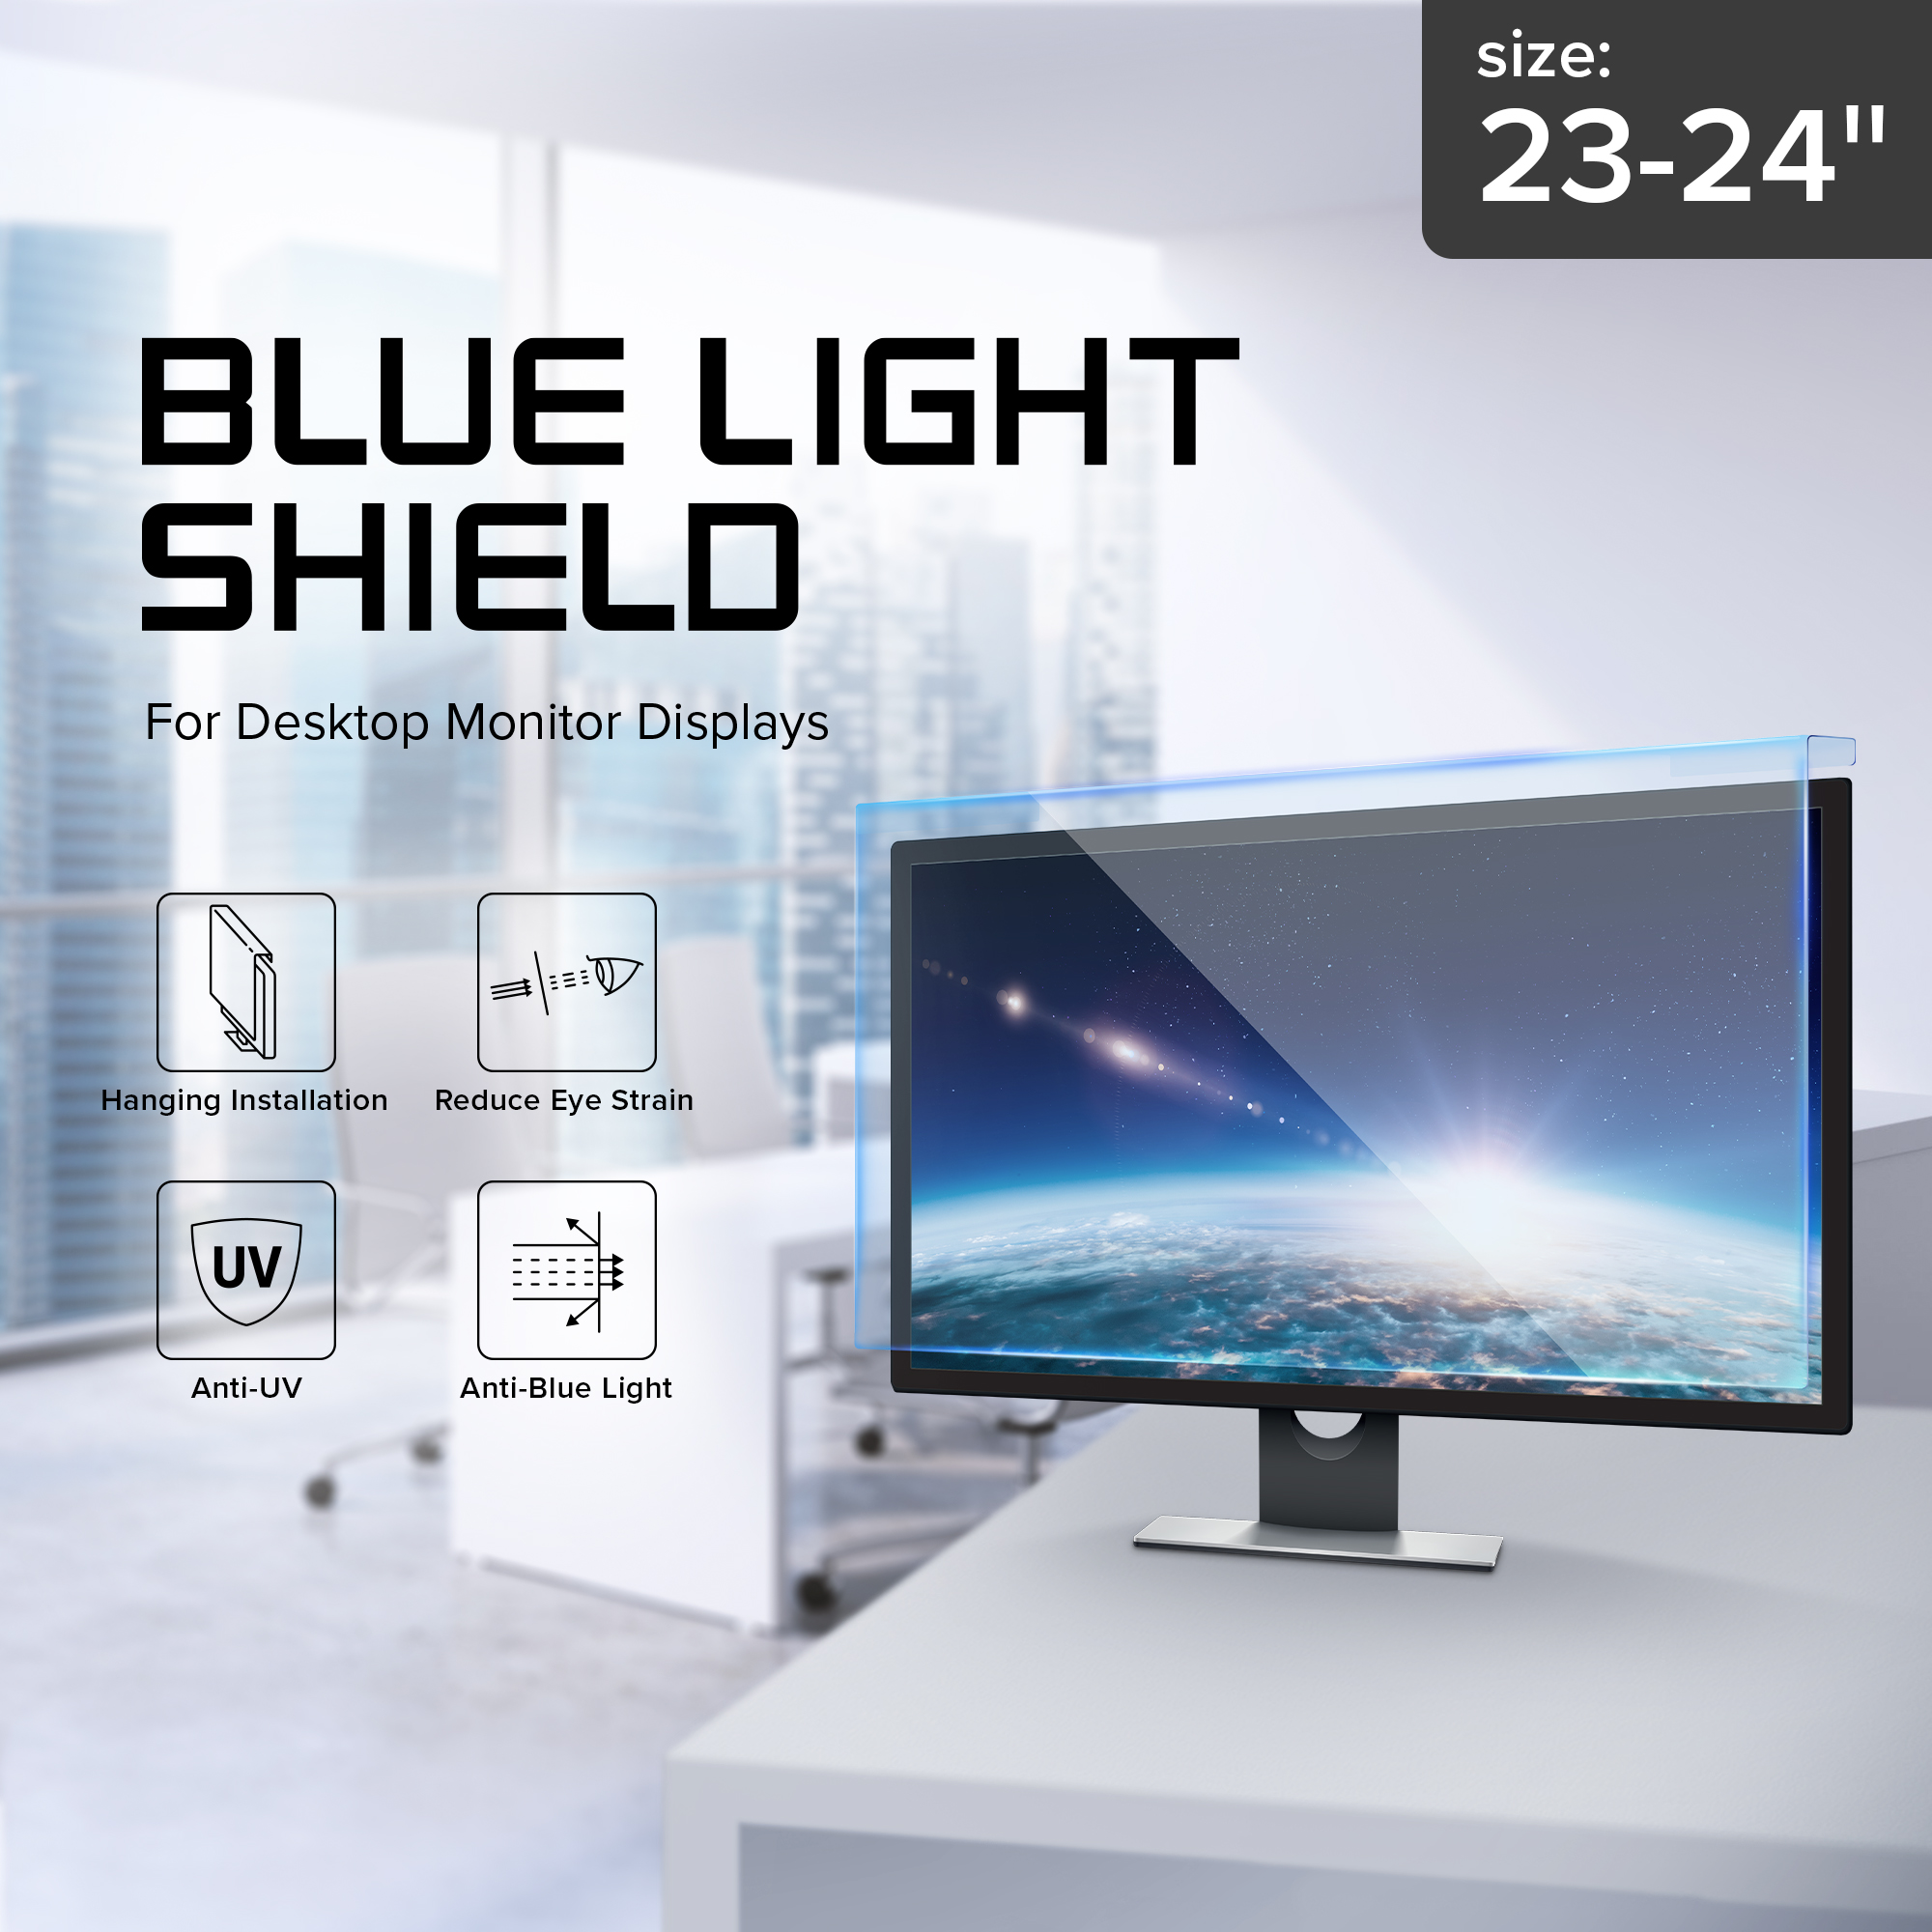 Blue Light Shield_23-24inch